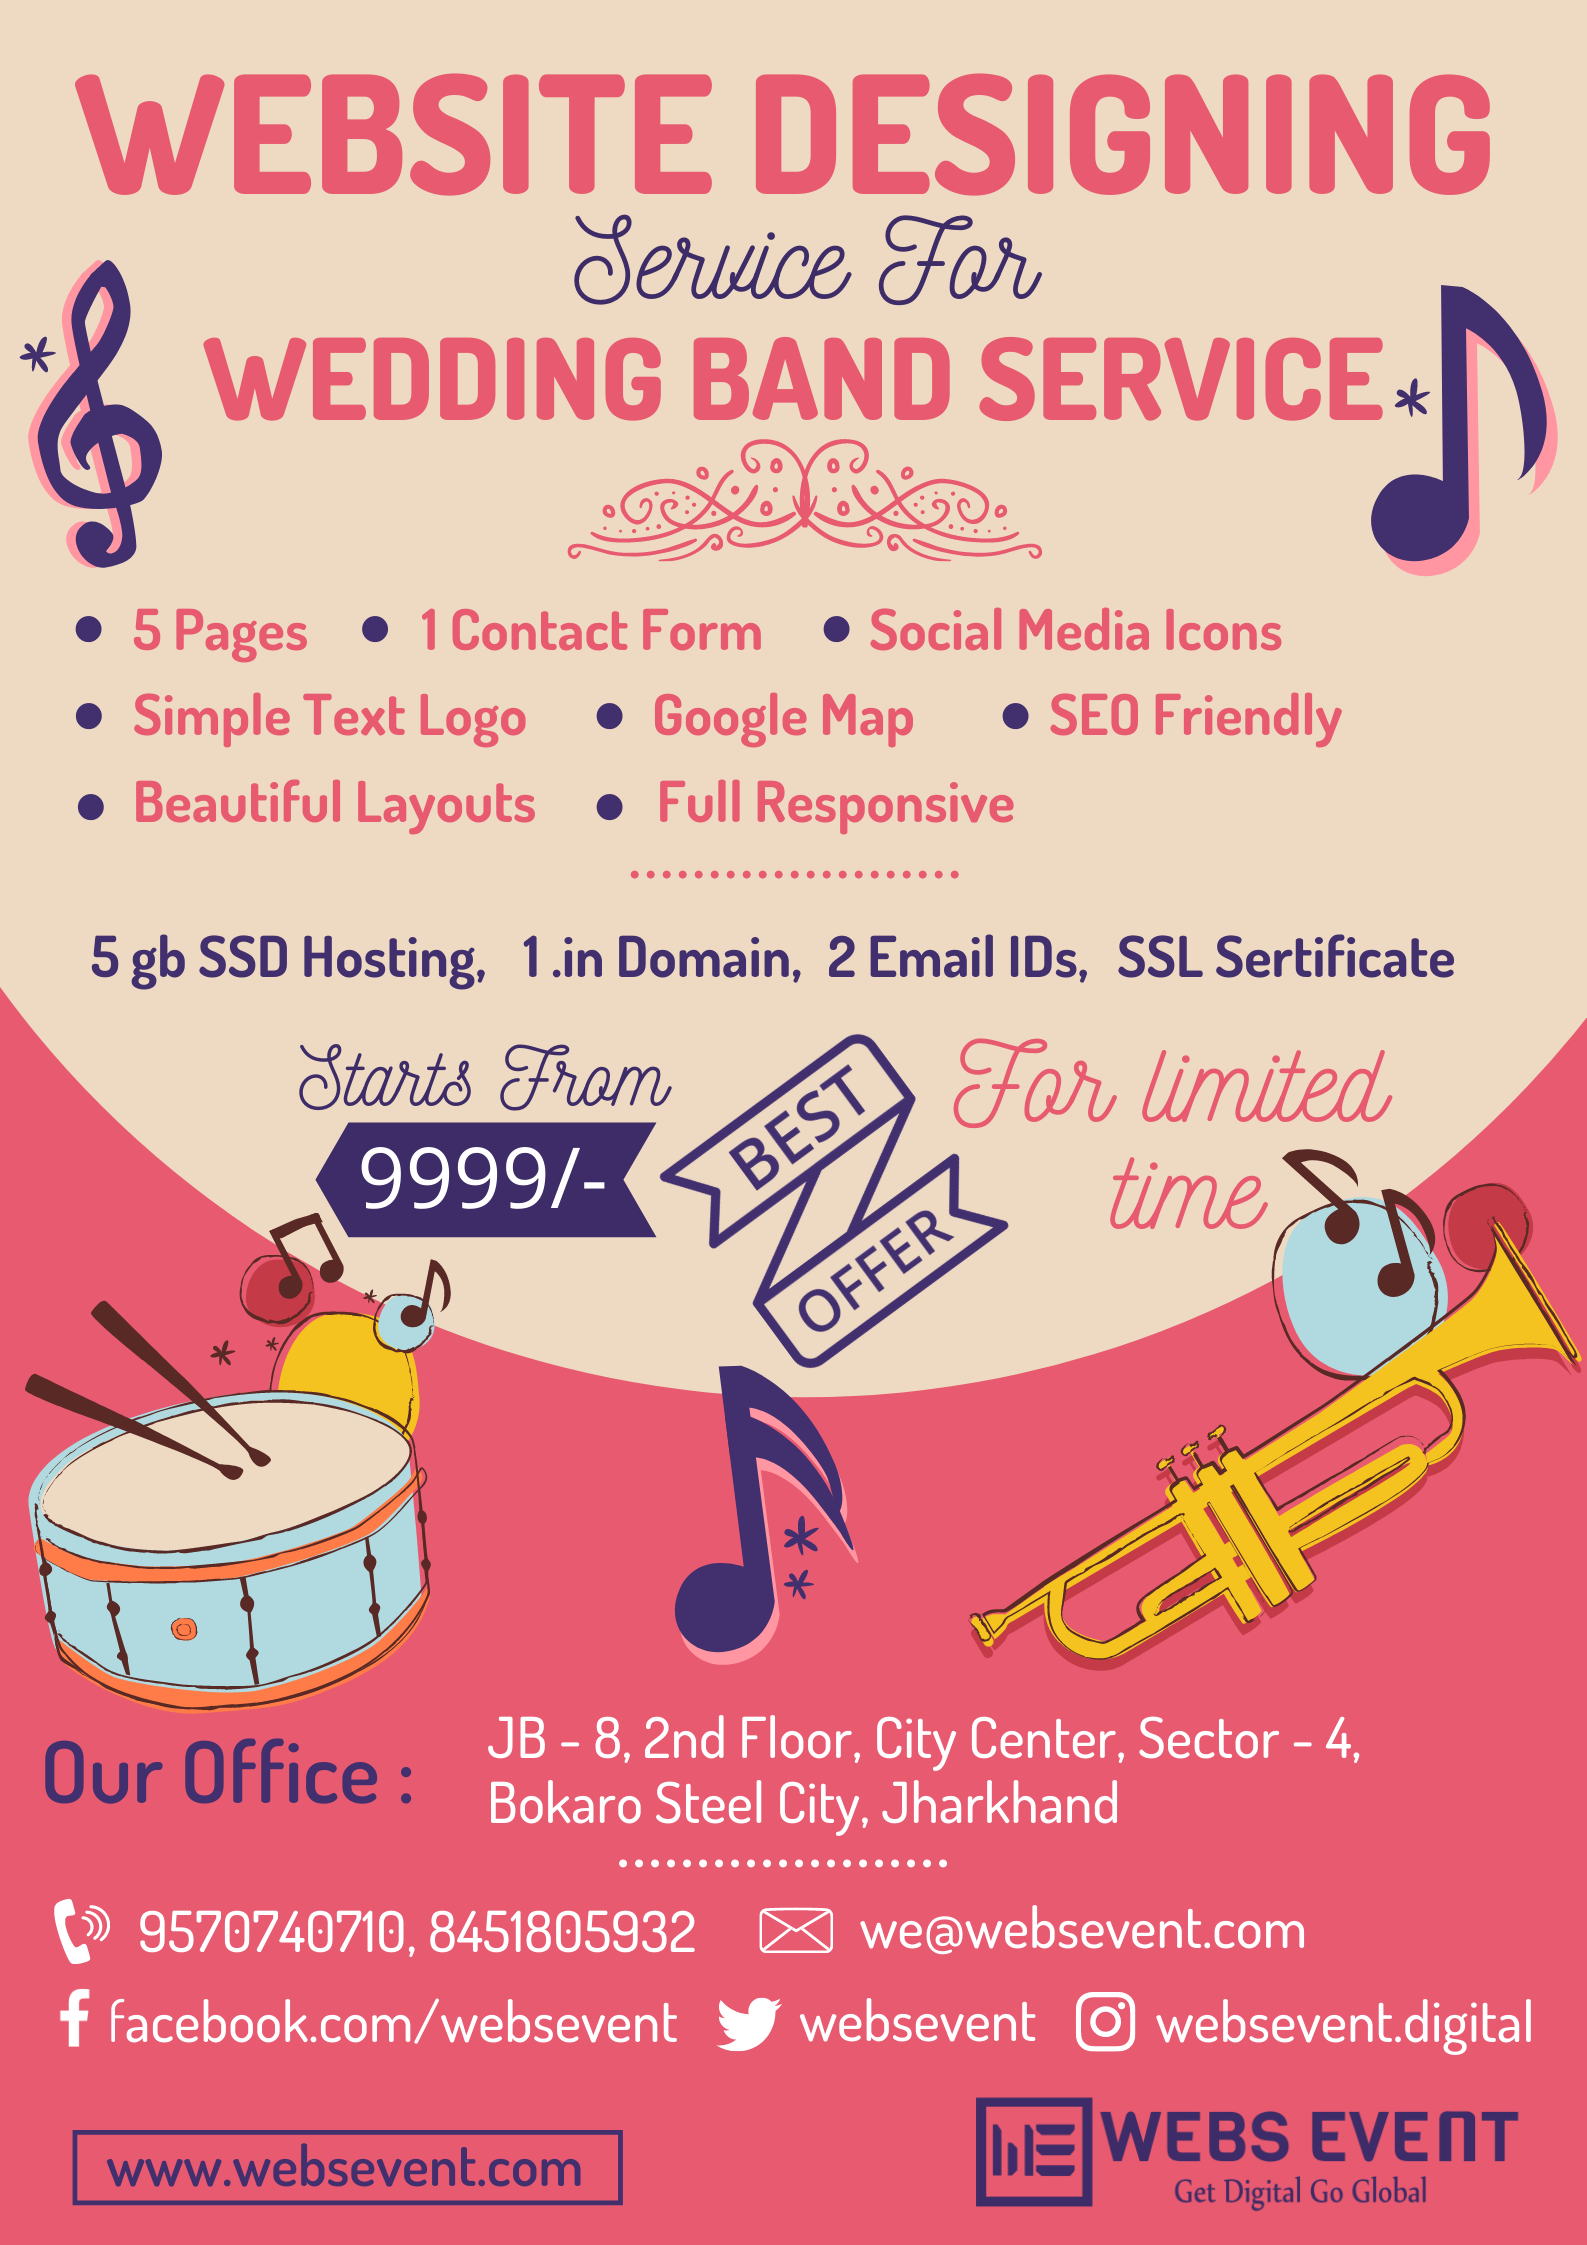 Website design for Wedding Band Service at Rs.9999/-  